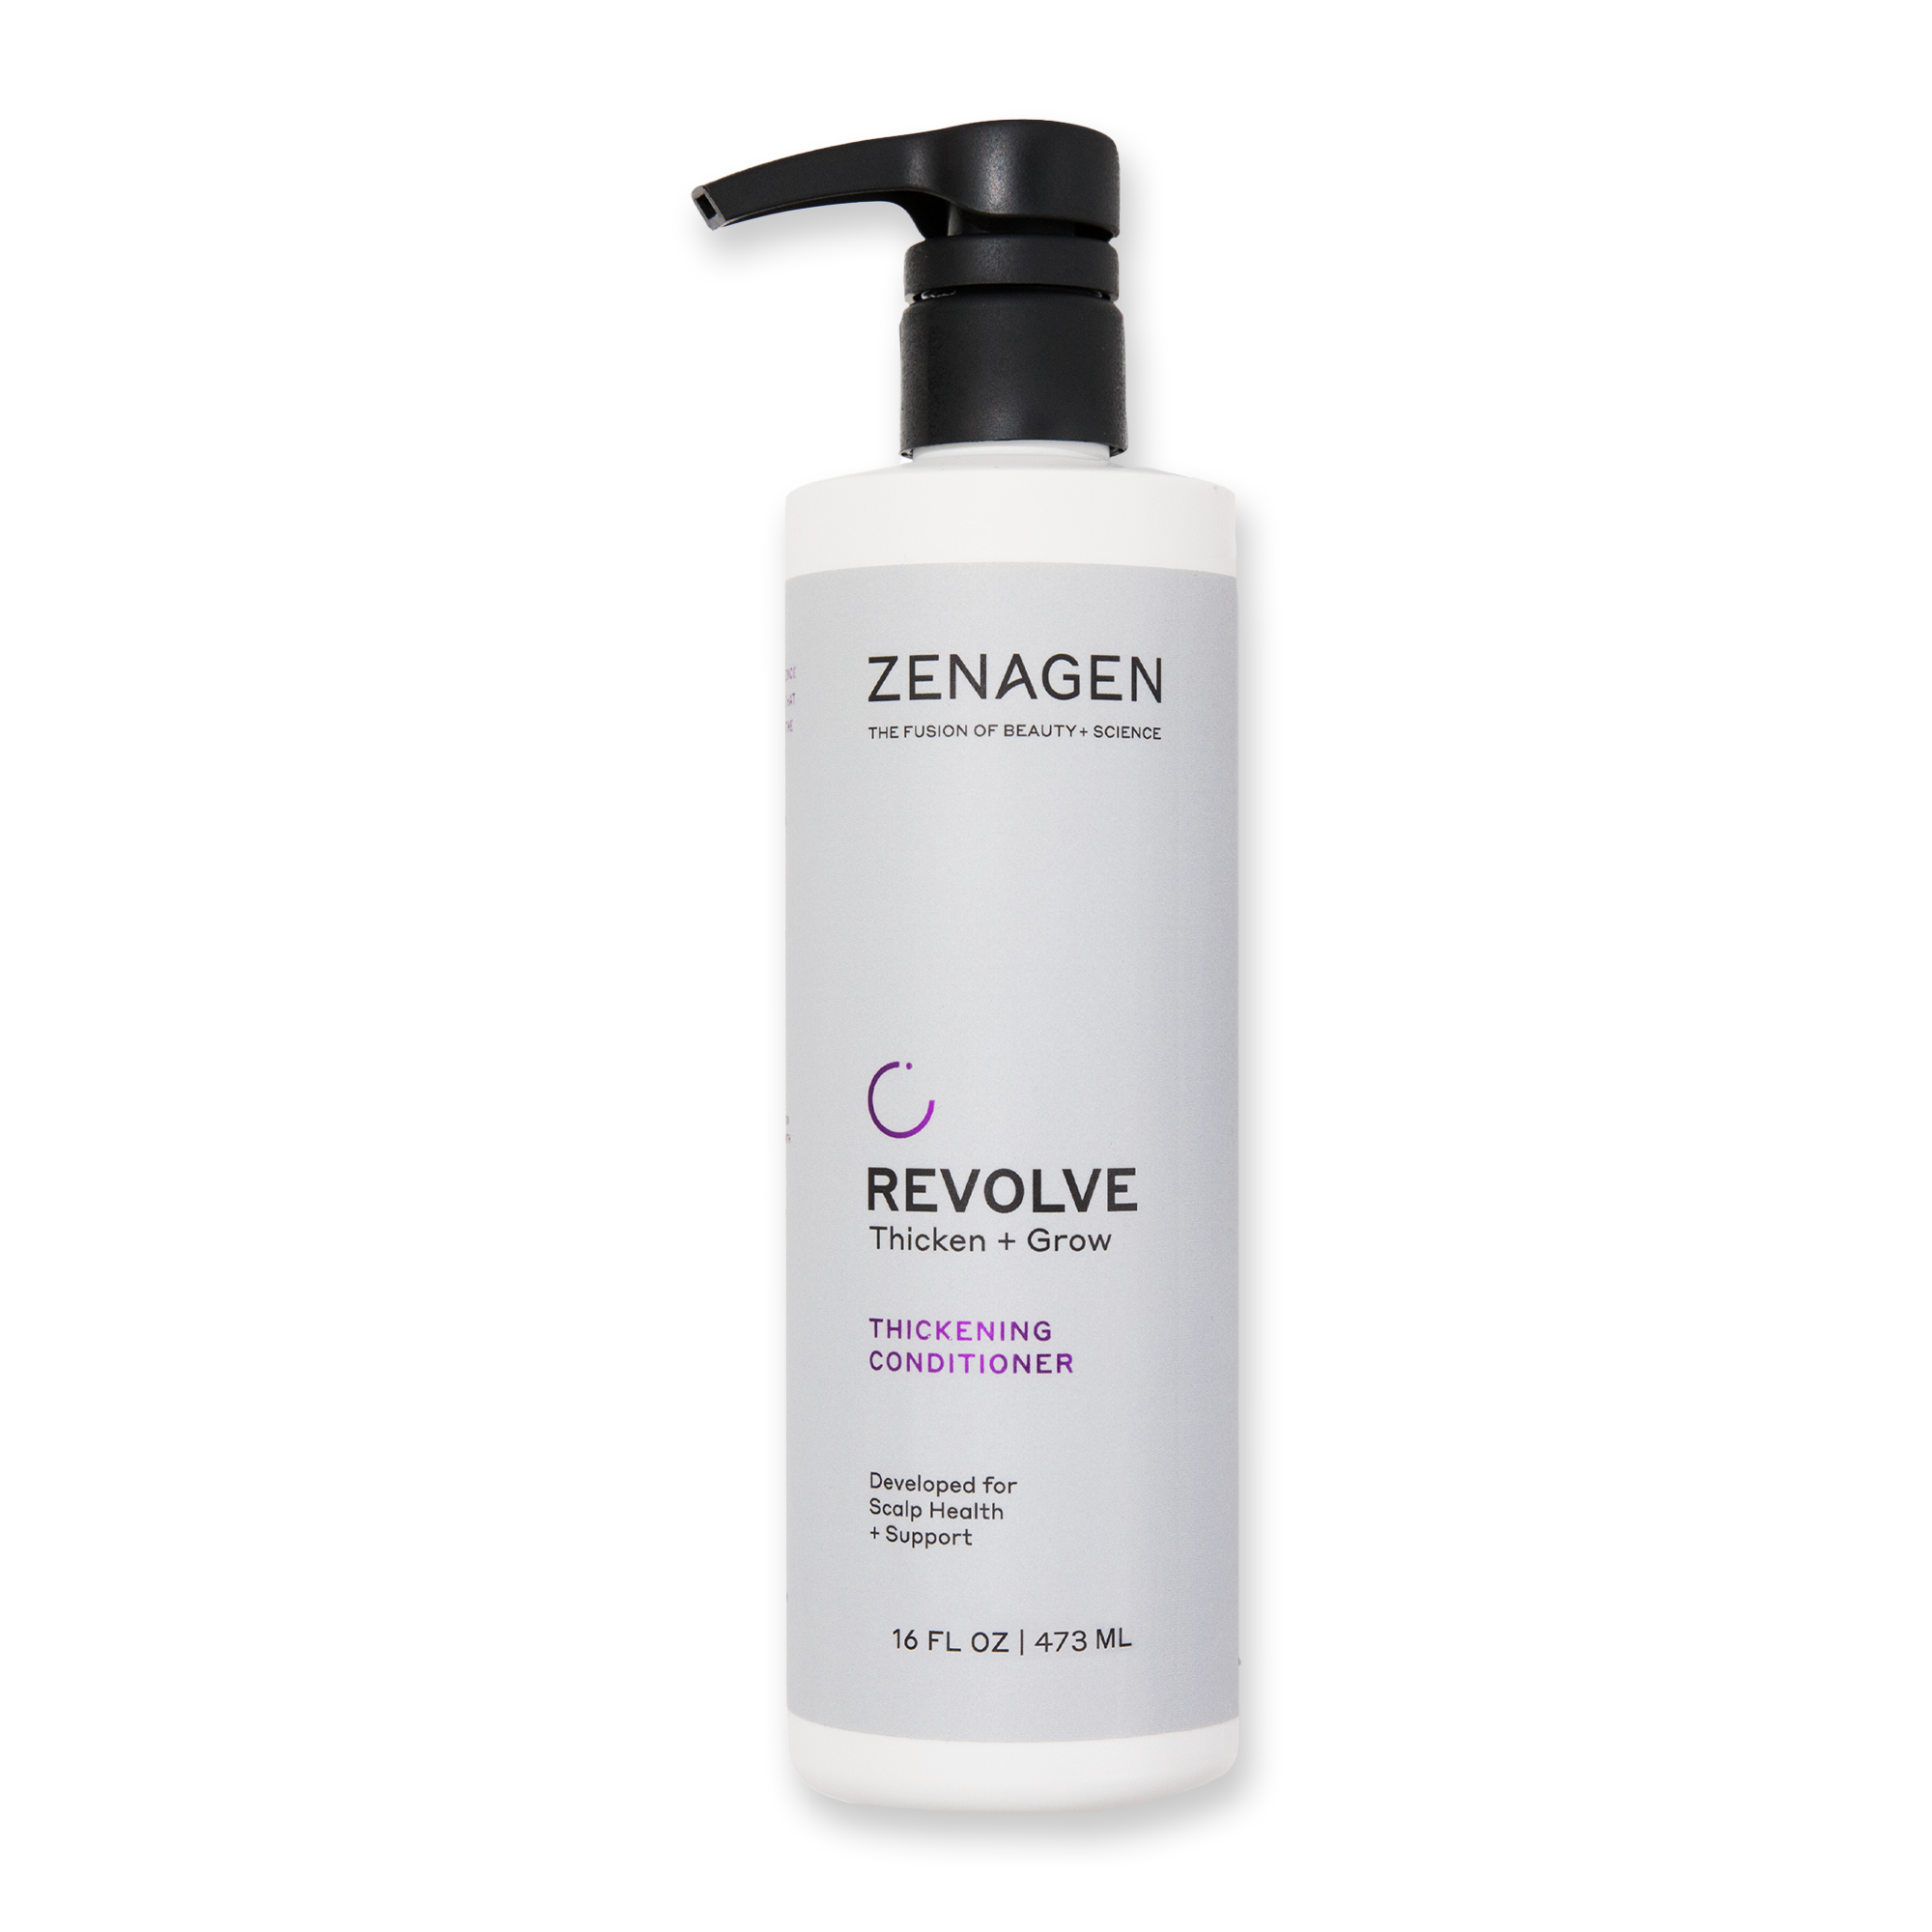 Zenagen Revolve Women's Hair Loss Shampoo and Conditioner Duo 16oz / 16OZ